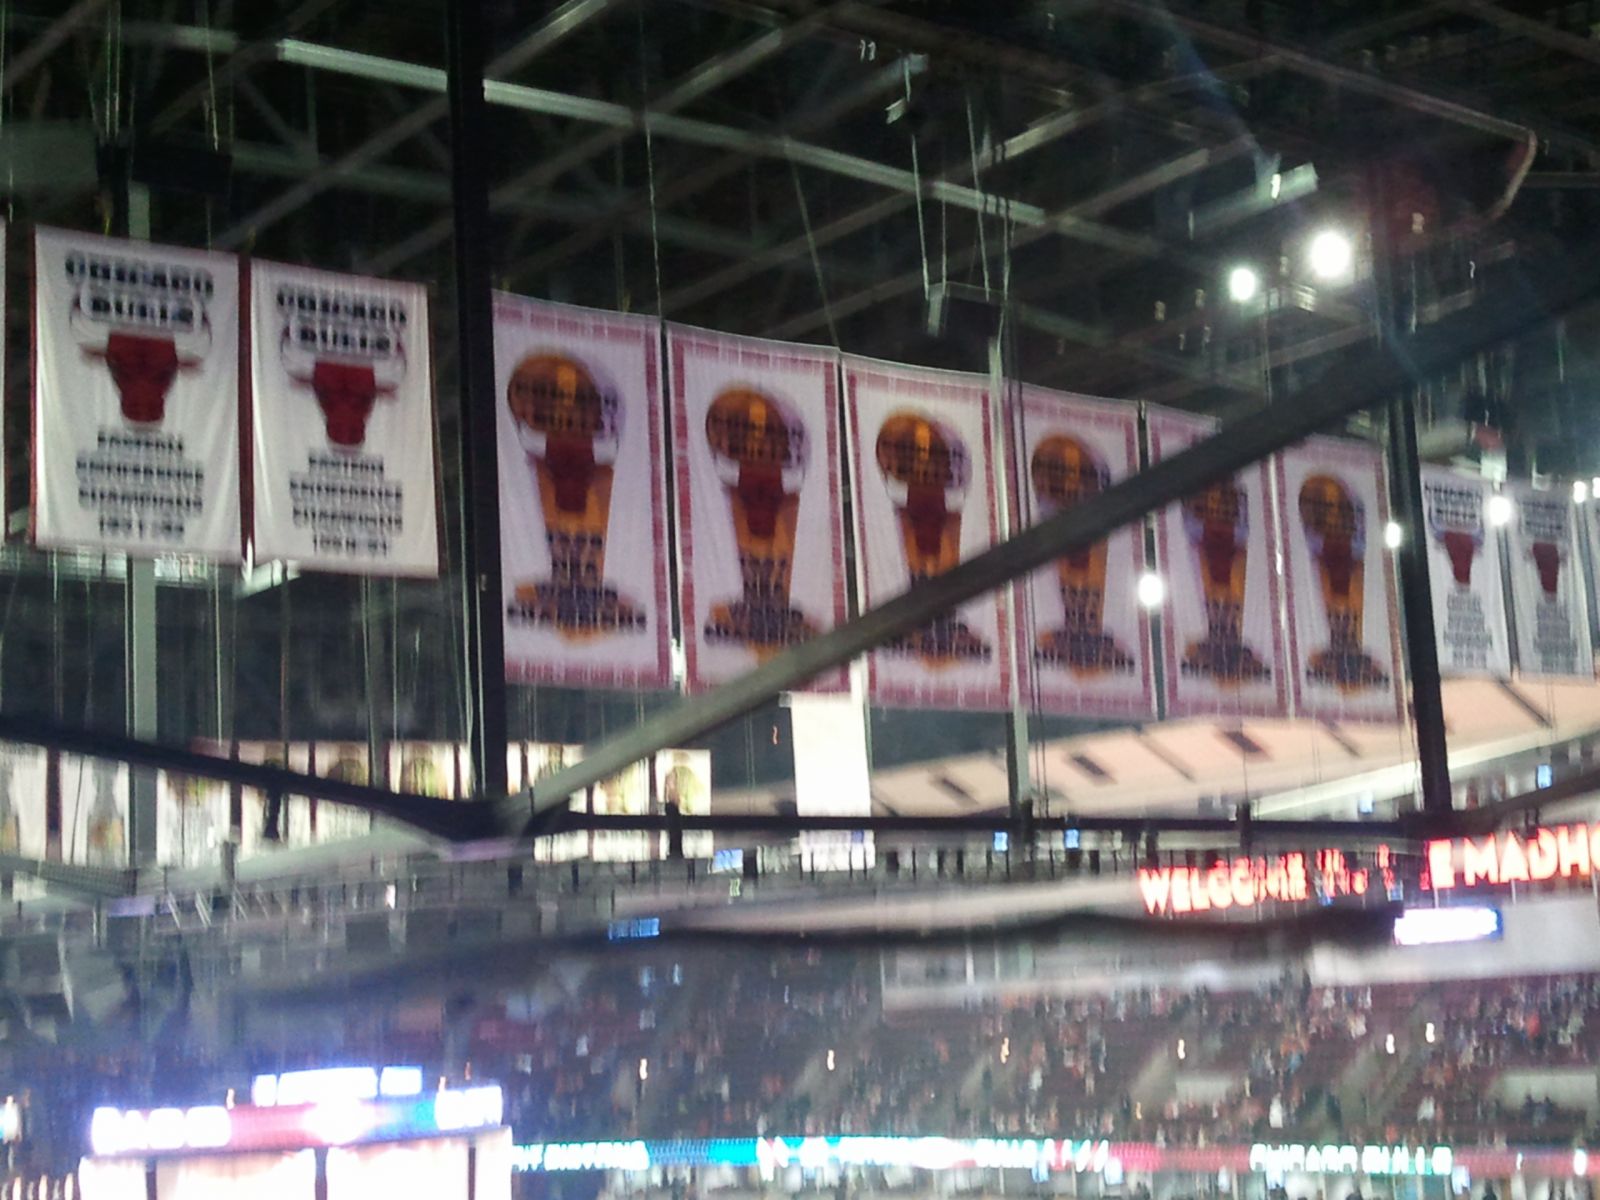 Chicago Bulls banners